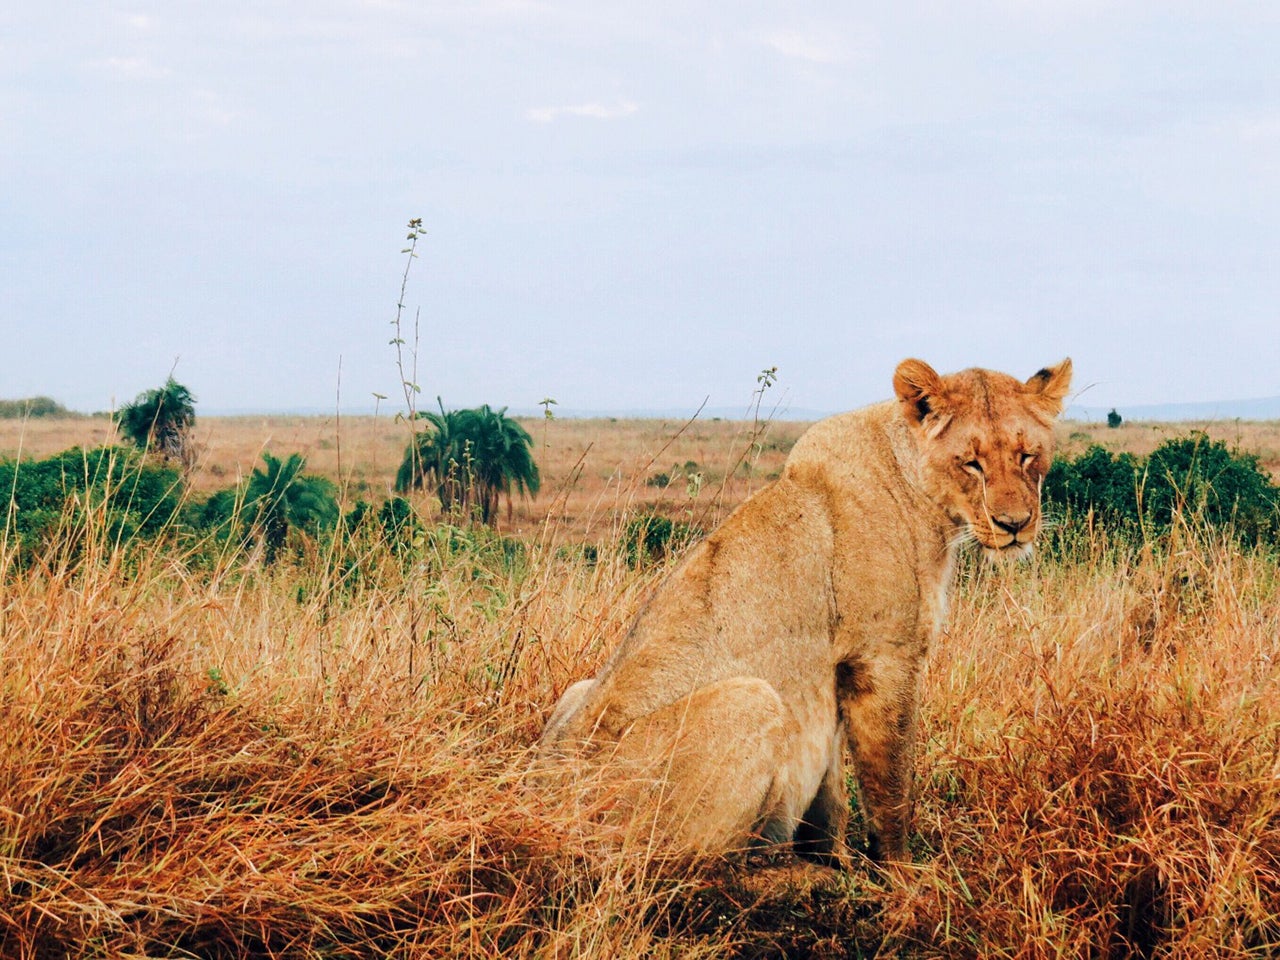 Lioness in the Nairobi National Park, Kenya